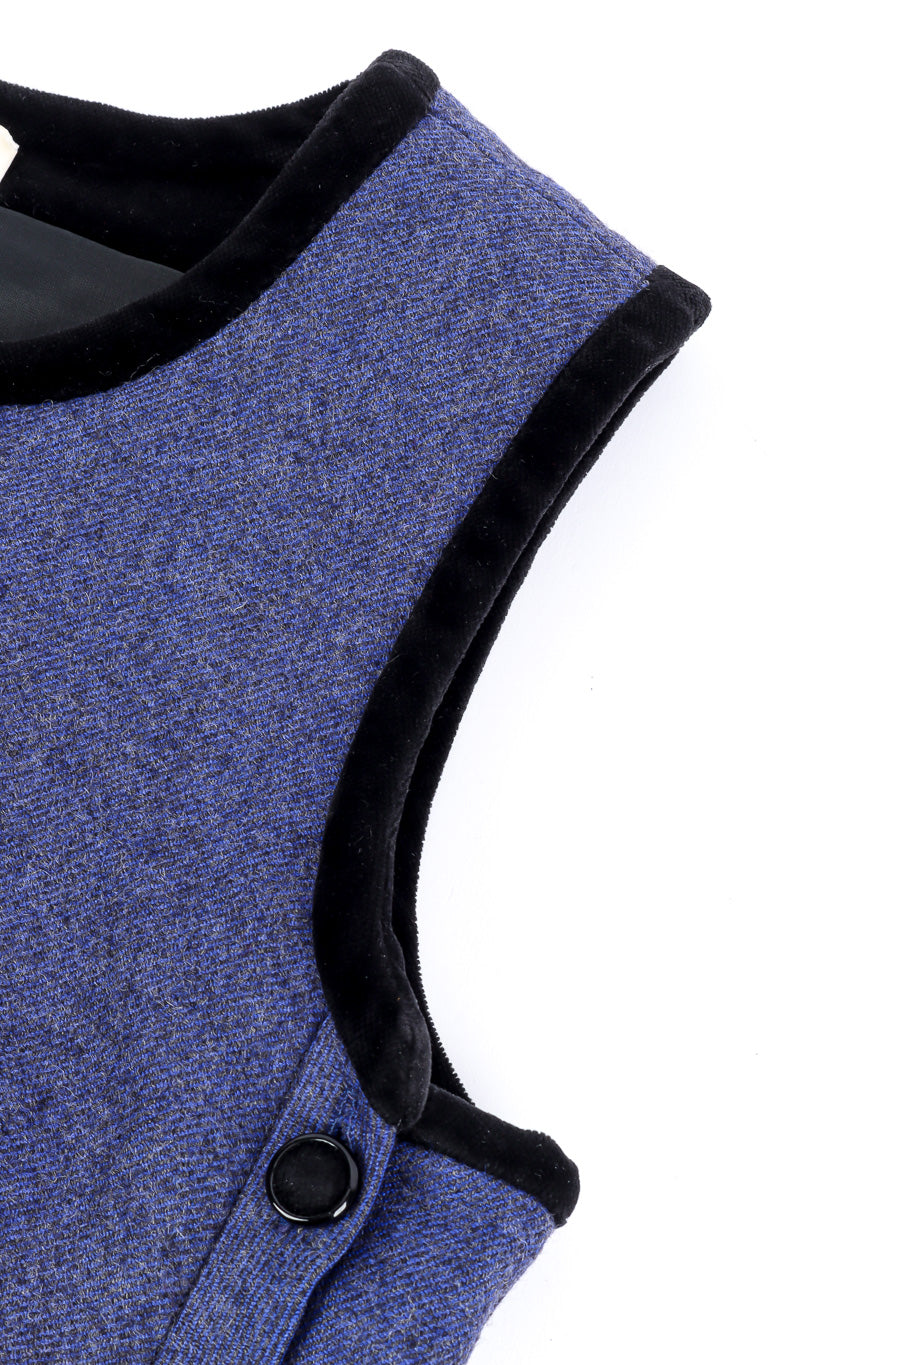 Valentino Boutique cotton denim top and skirt set top trim details @recessla